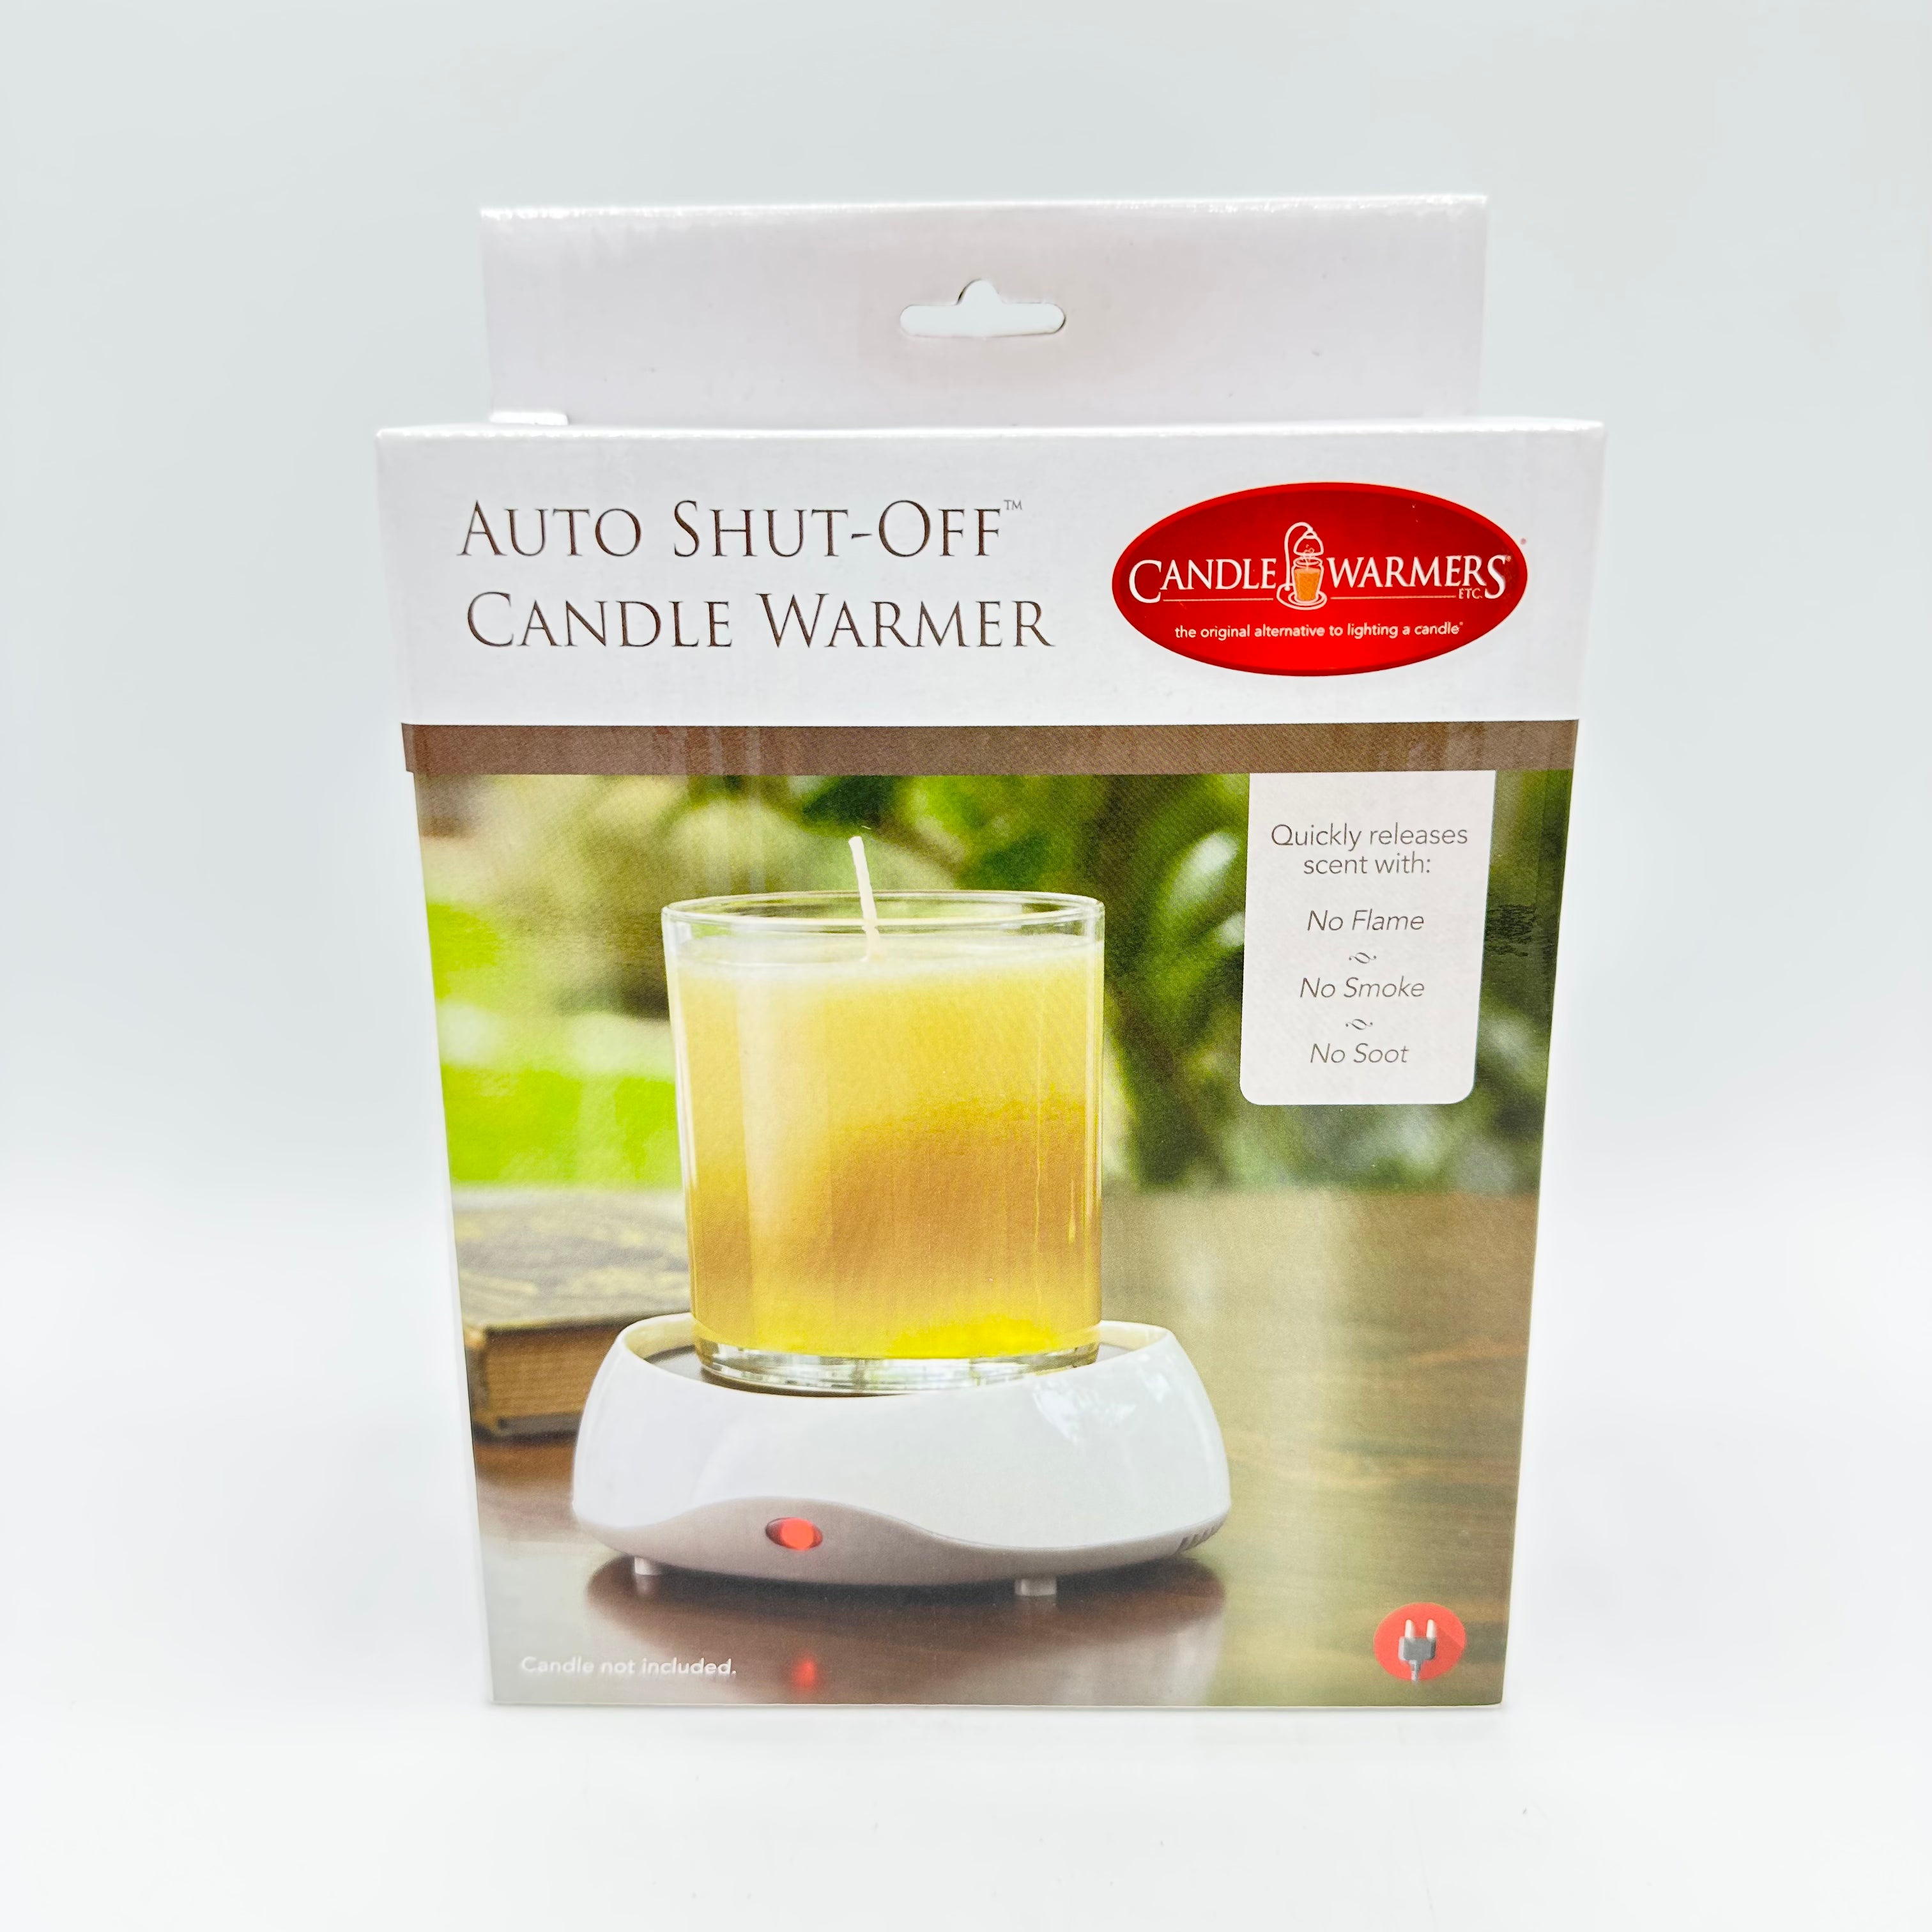 Auto Shut-Off Candle Warmer